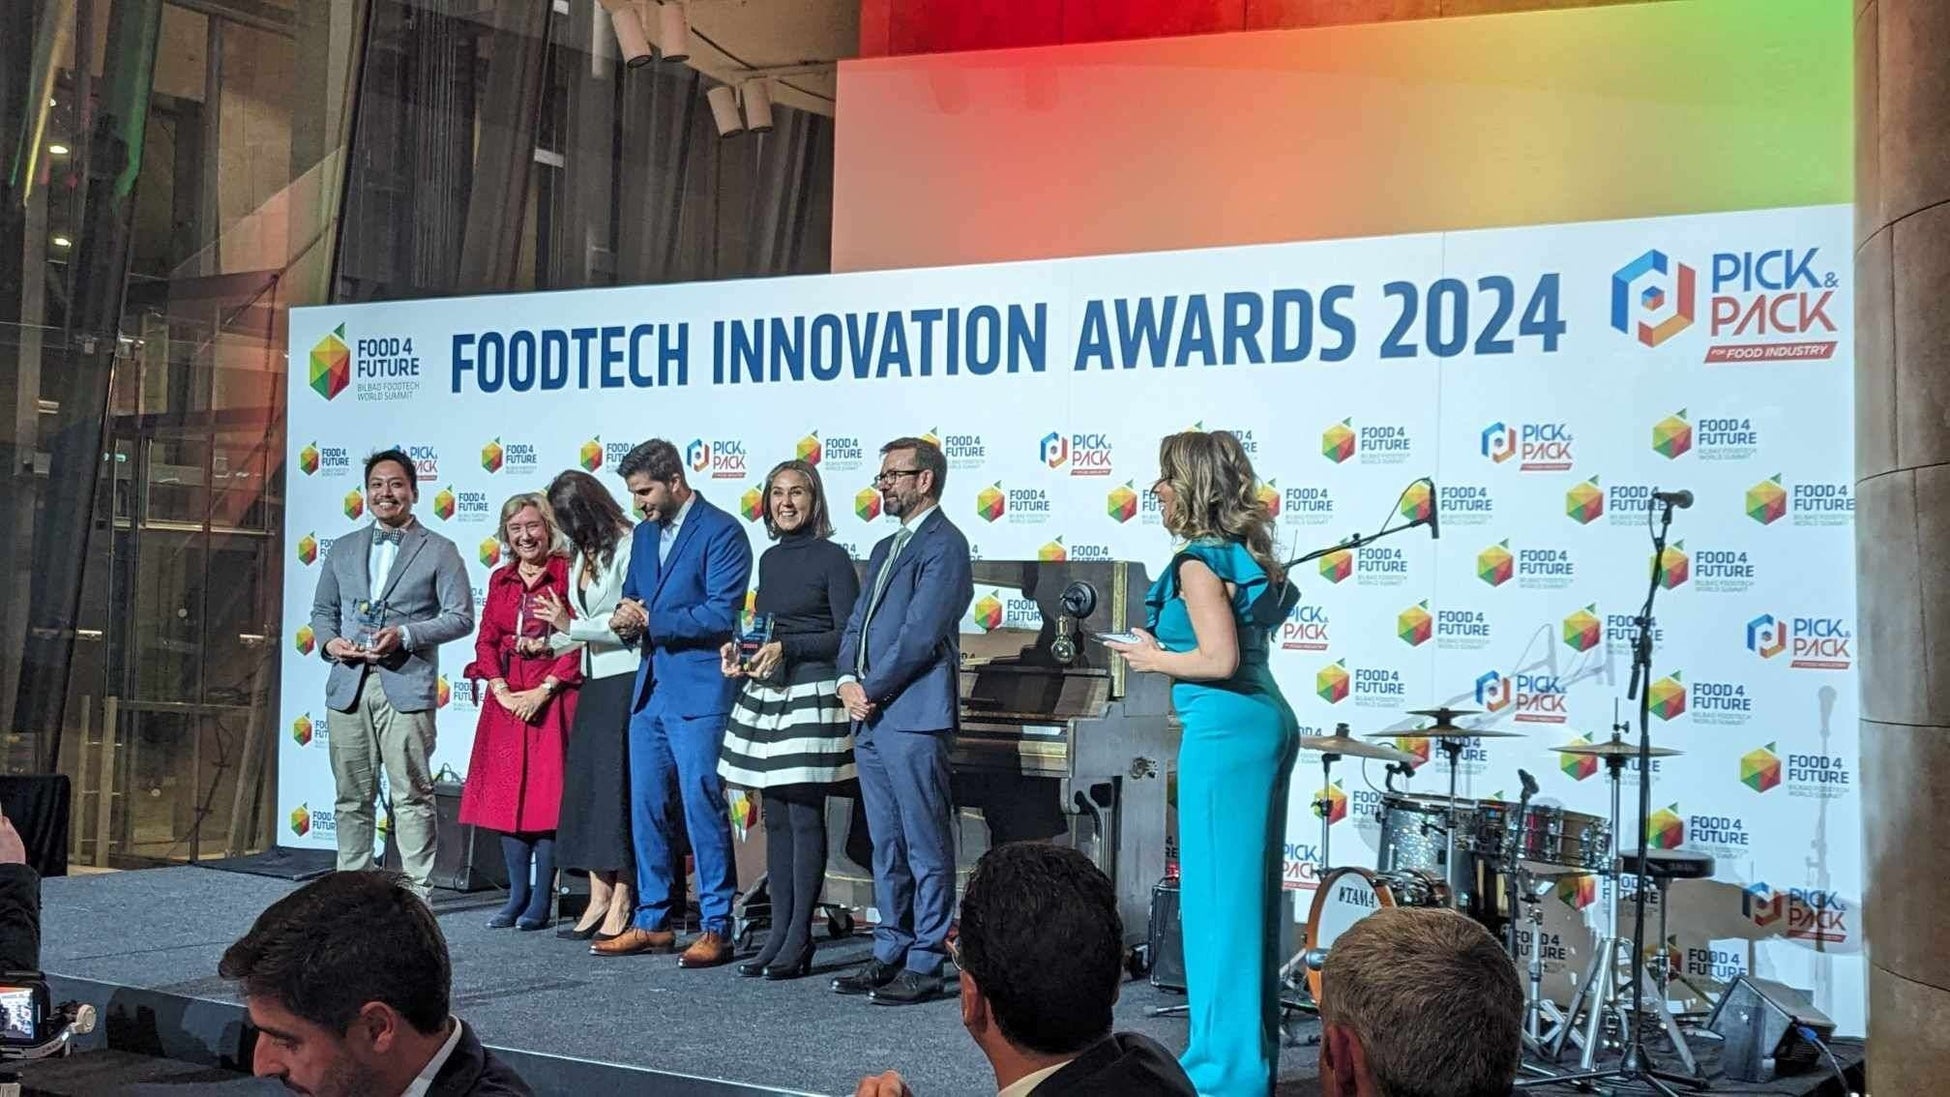 【NinjaFoods】食の祭典「Food 4 Future – Expo FoodTech 2024」にてアジア唯一のヘルシーフード部門ファイナリストとして表彰